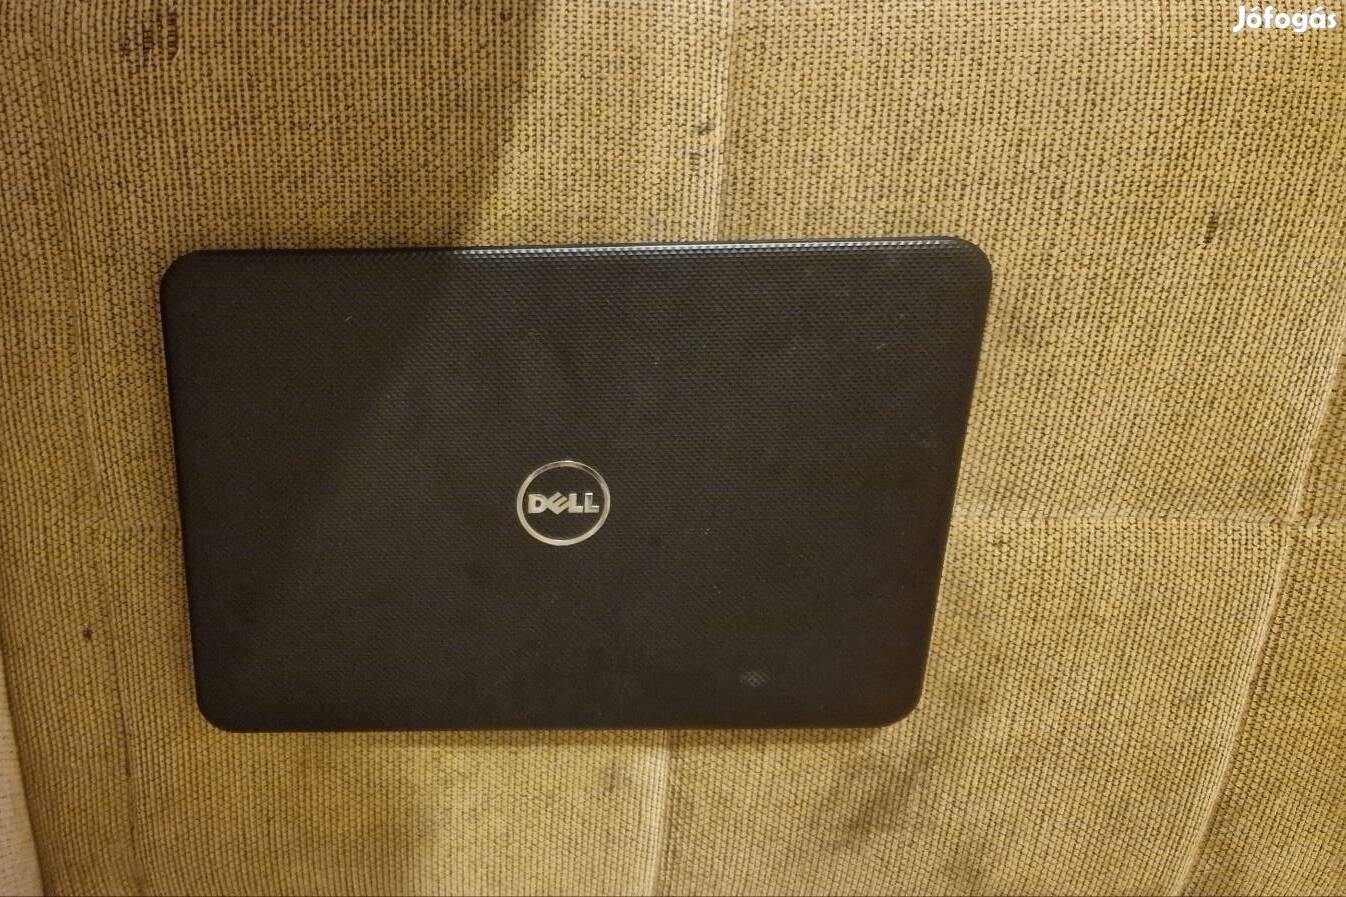 Dell Inspiron 3521 laptop